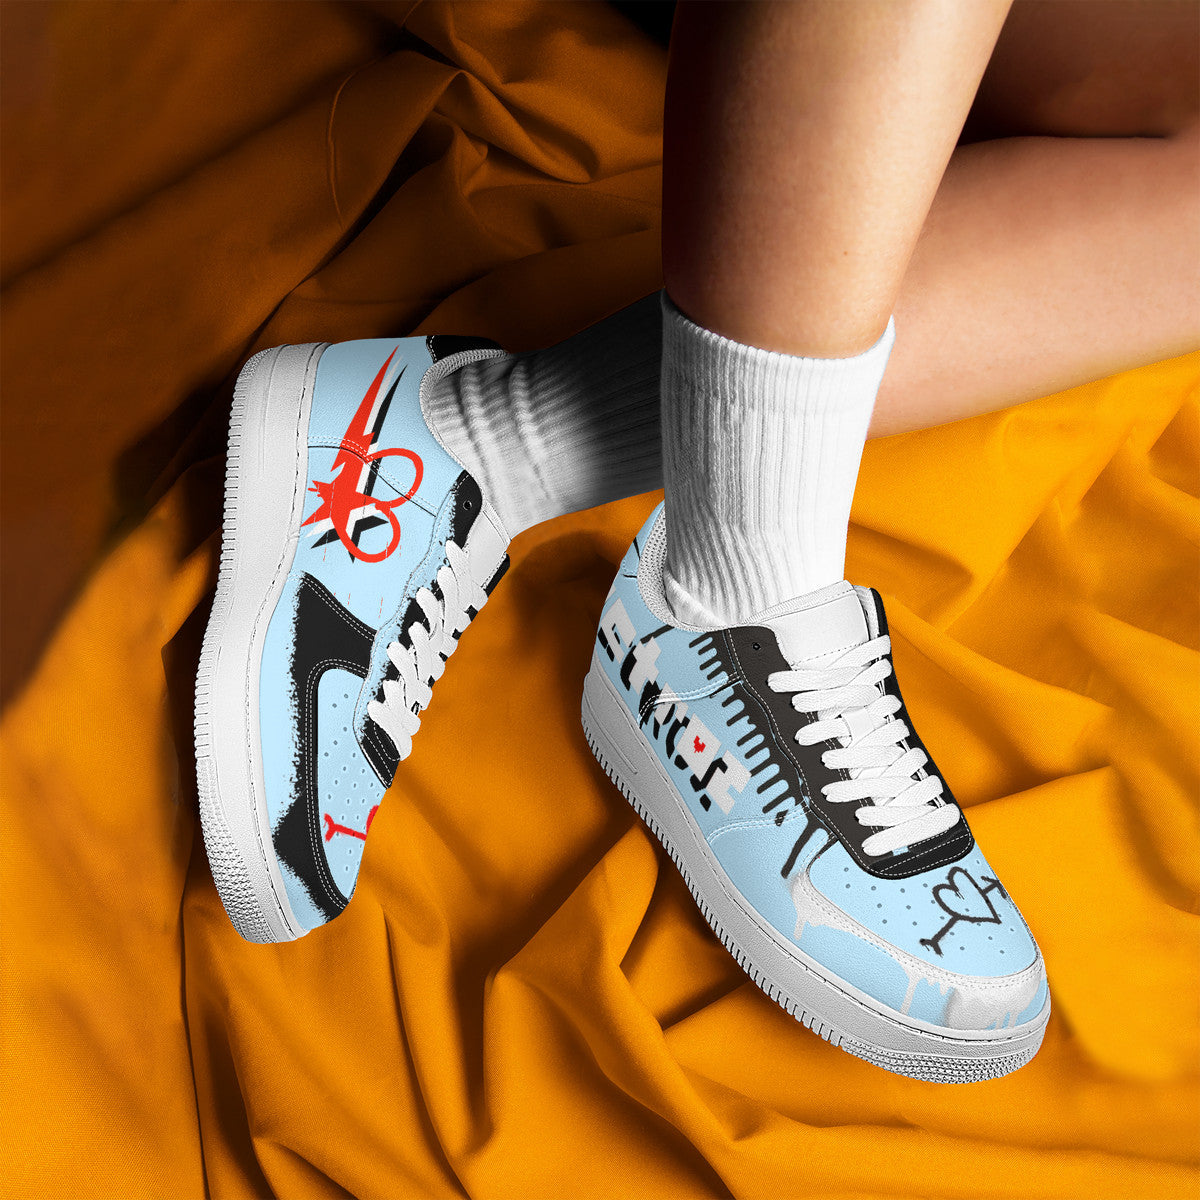 Metro Love | Custom Cool Shoes | Shoe Zero